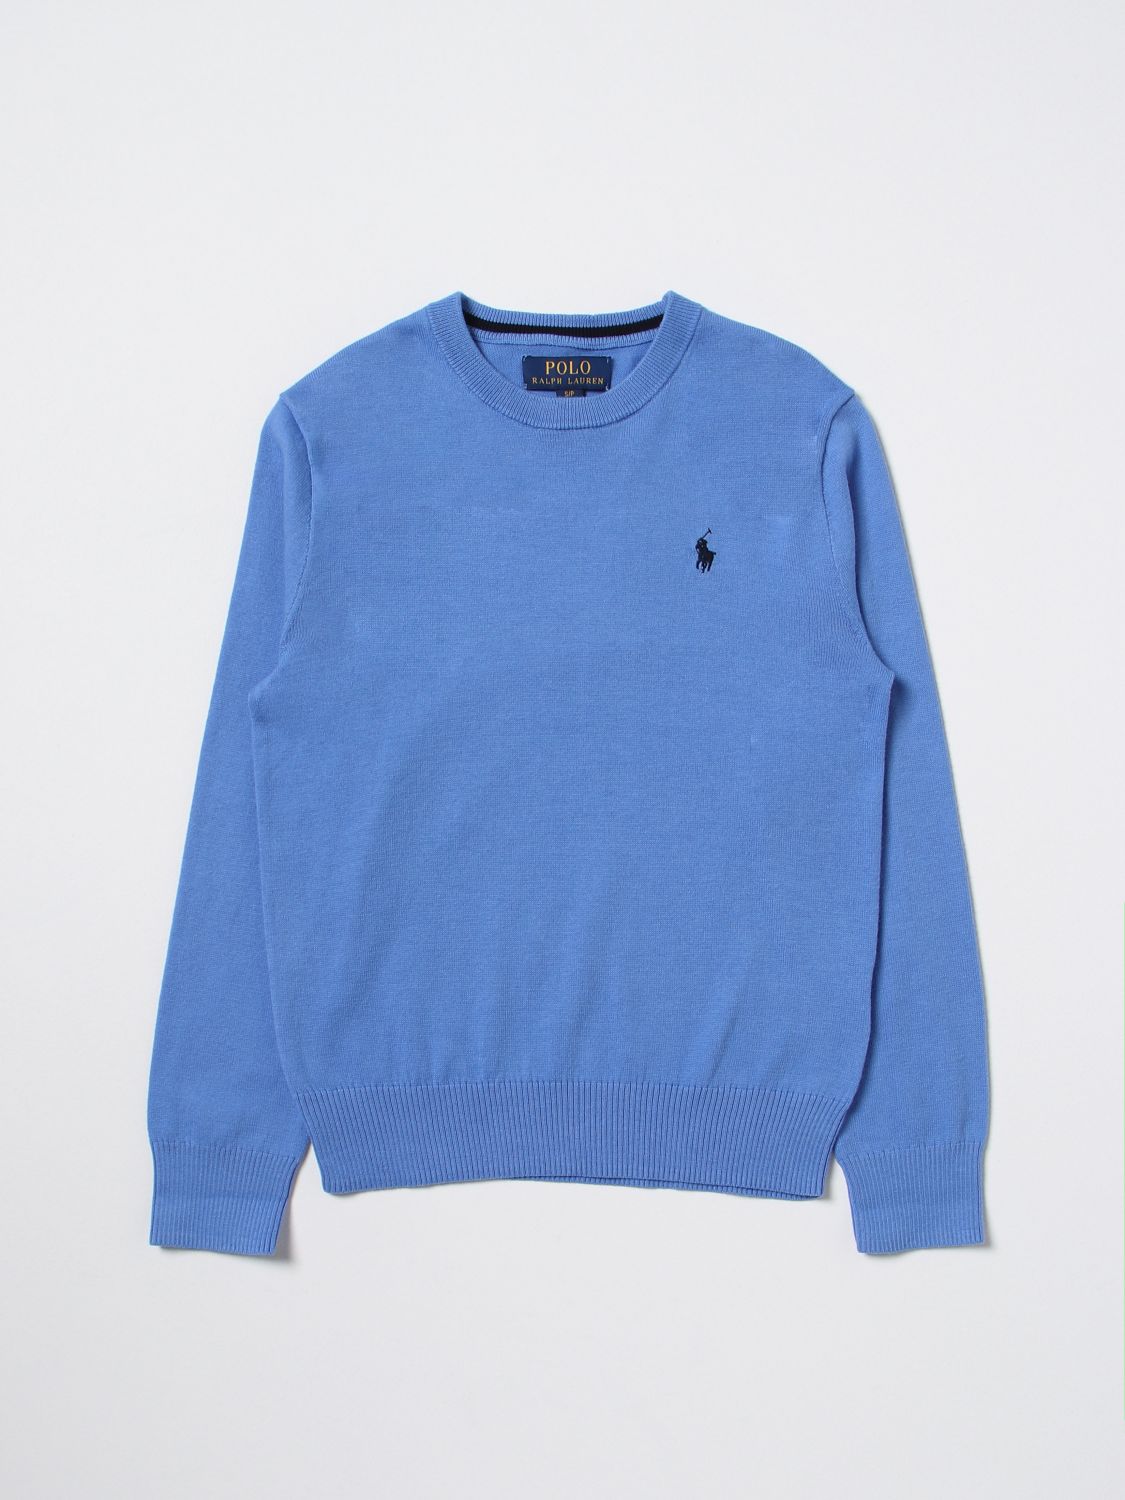 Polo Ralph Lauren Sweater  Kids Color Blue